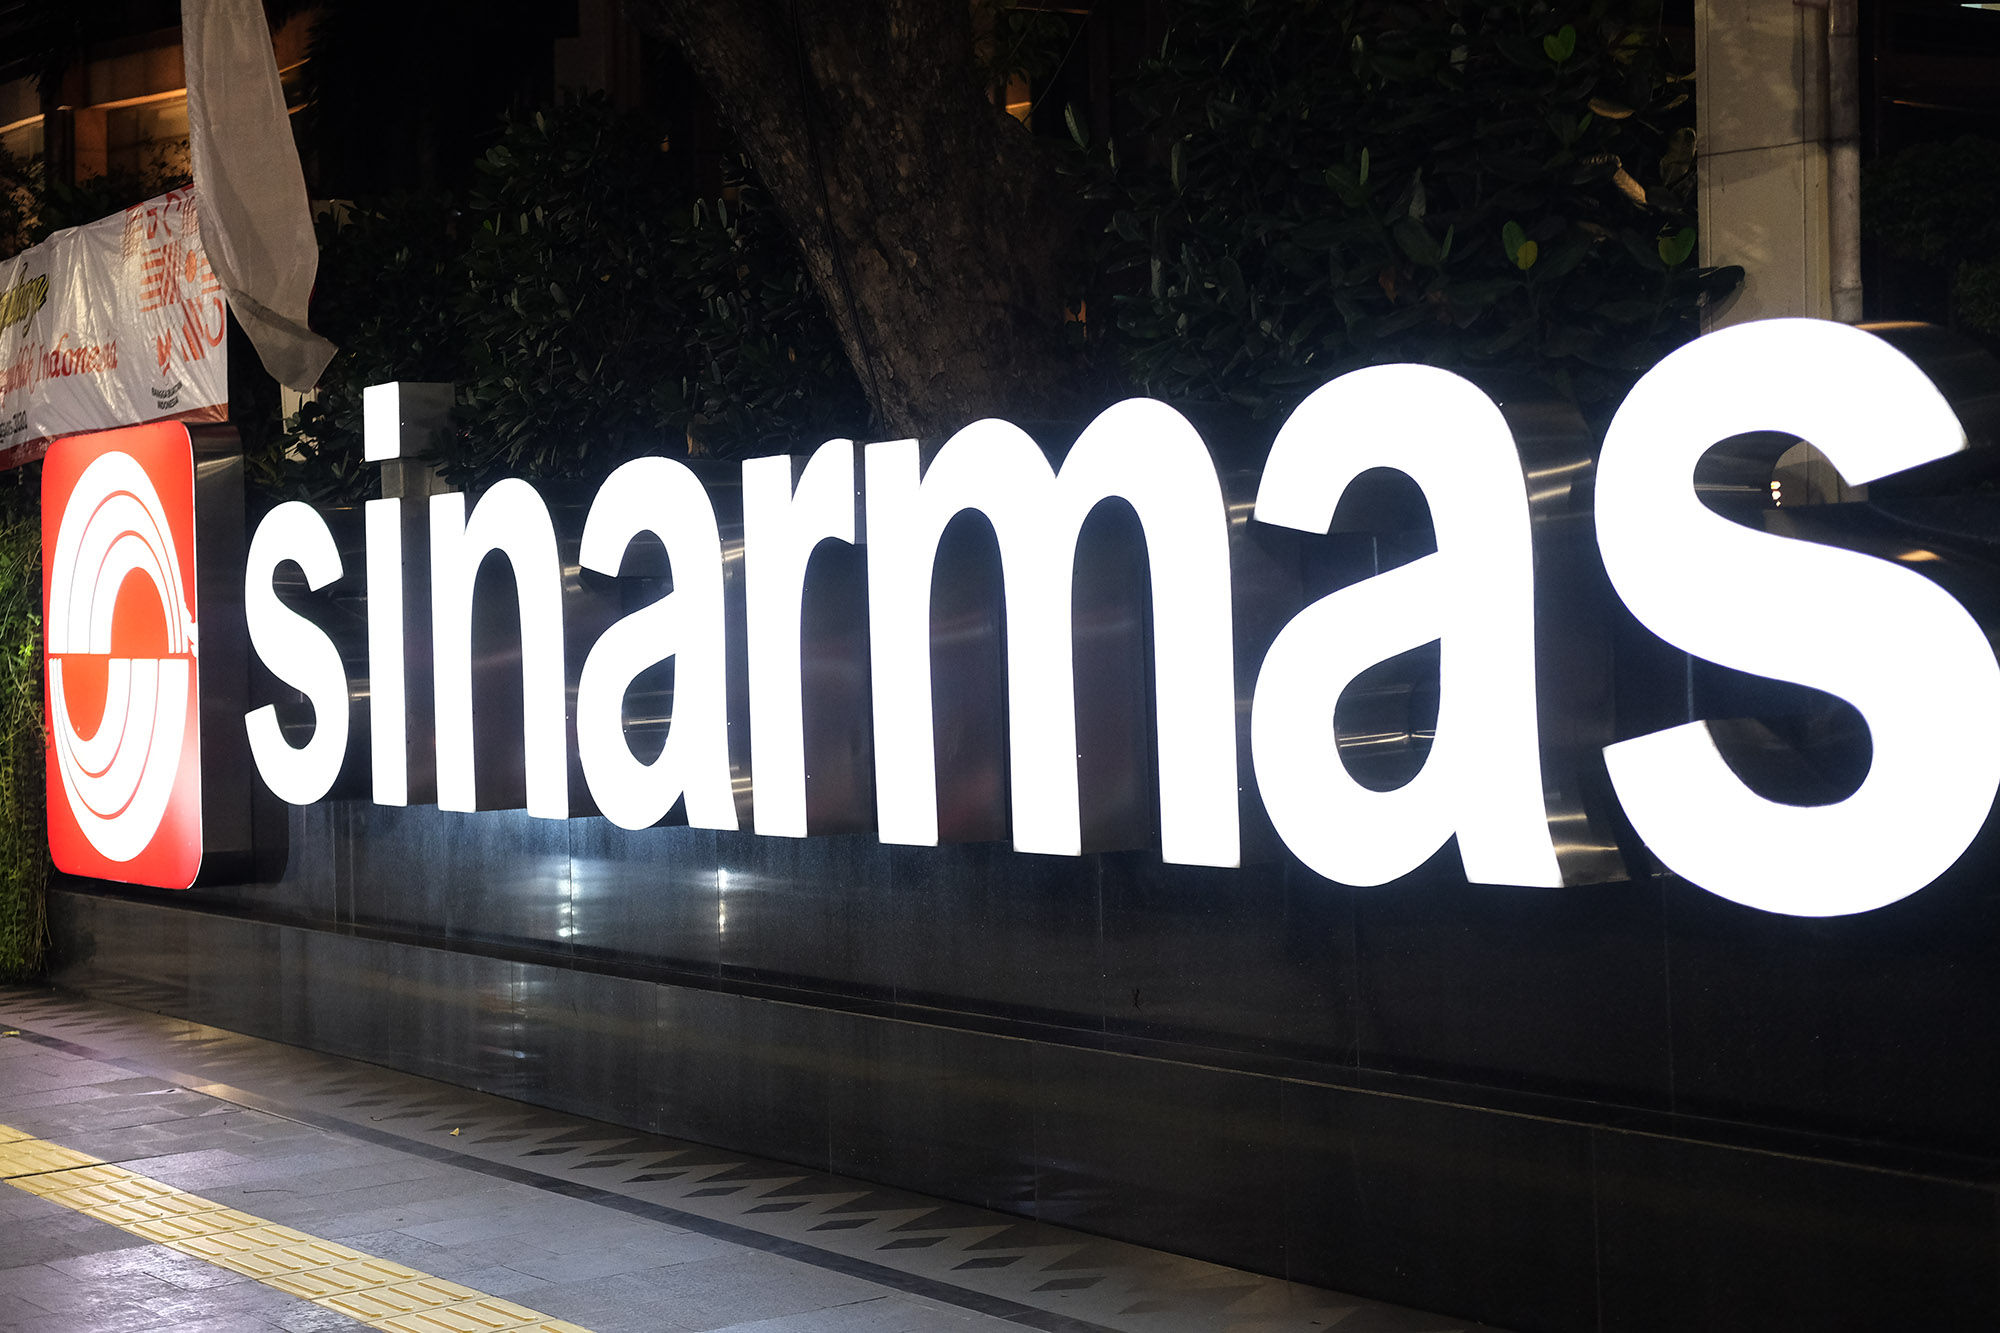 Logo Sinarmas Land di kawasan Thamrin, Jakarta. Foto: Ismail Pohan/TrenAsia